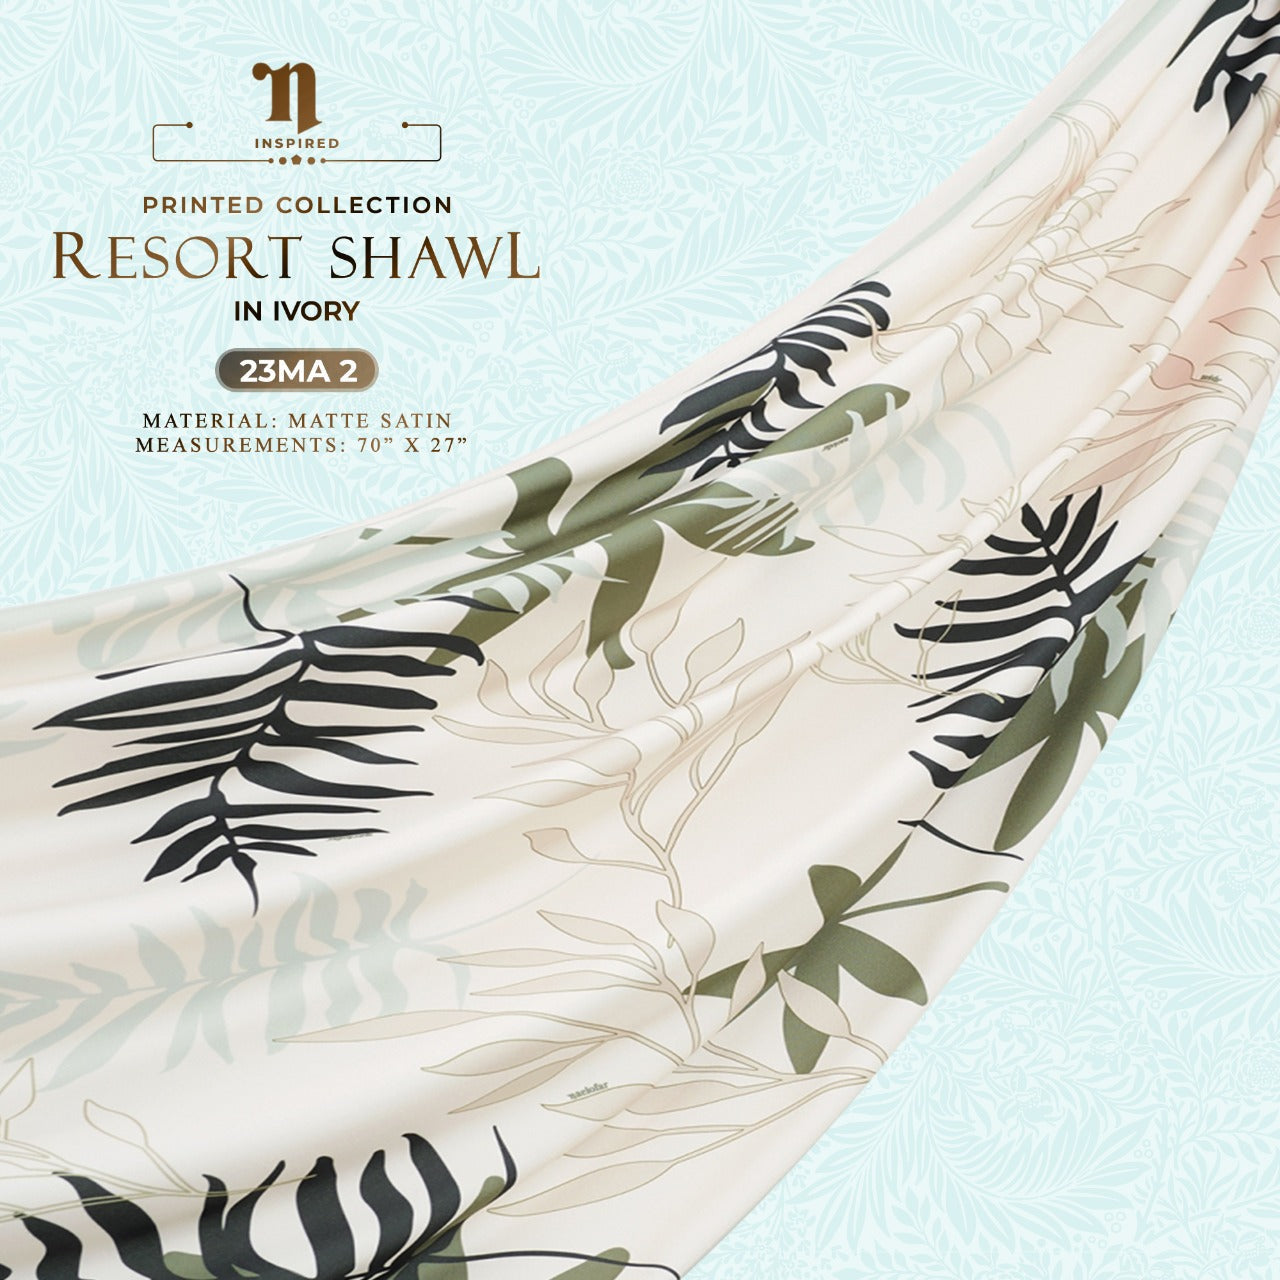 Naelofar Inspired The Resort Shawl Collection